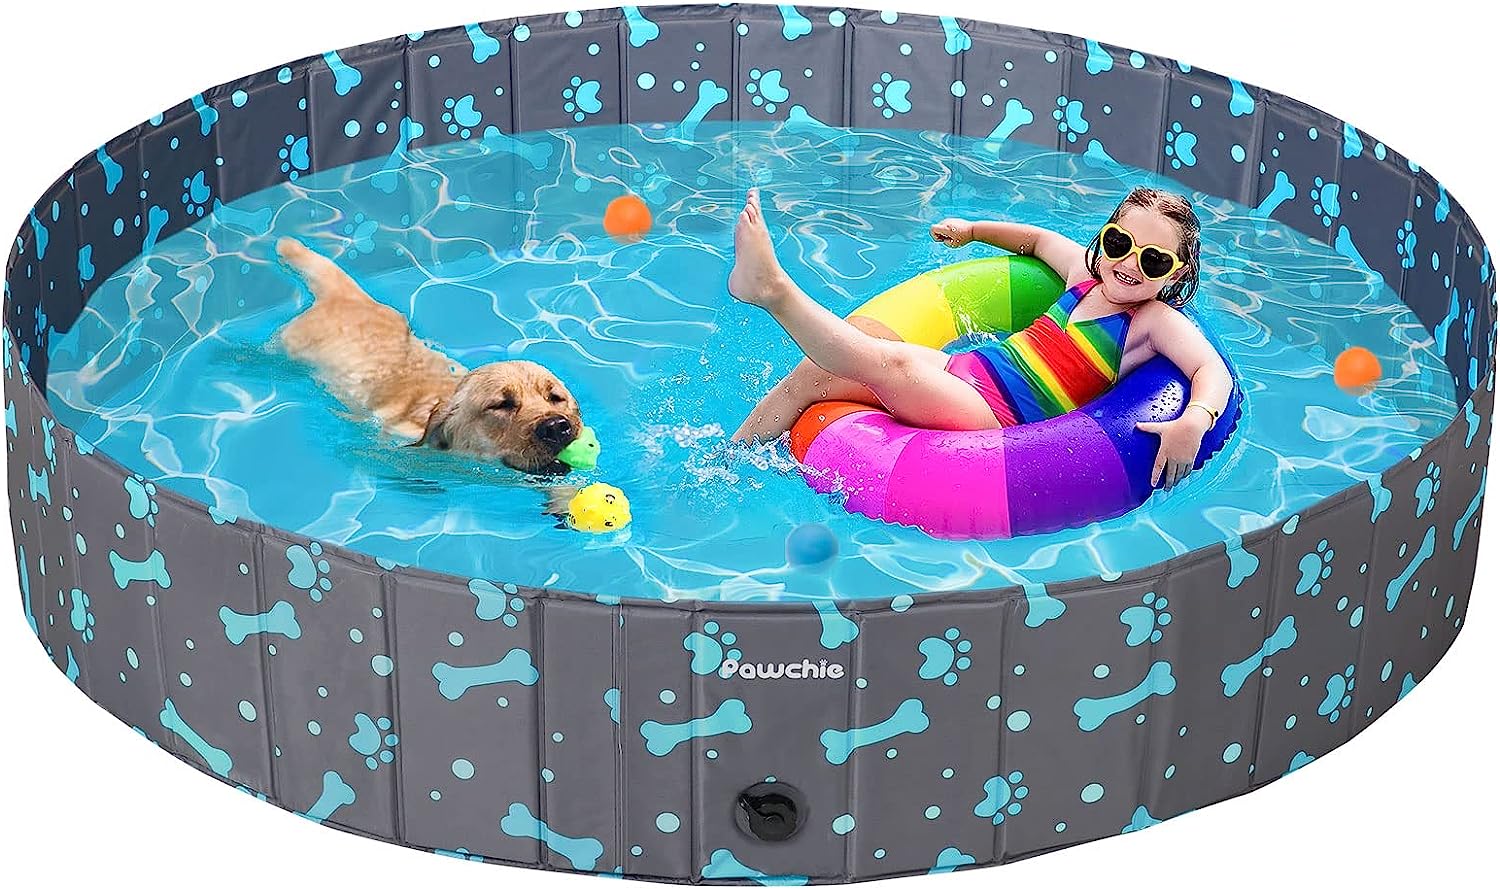 12. PAWCHIE Foldable Dog Swimming Pool